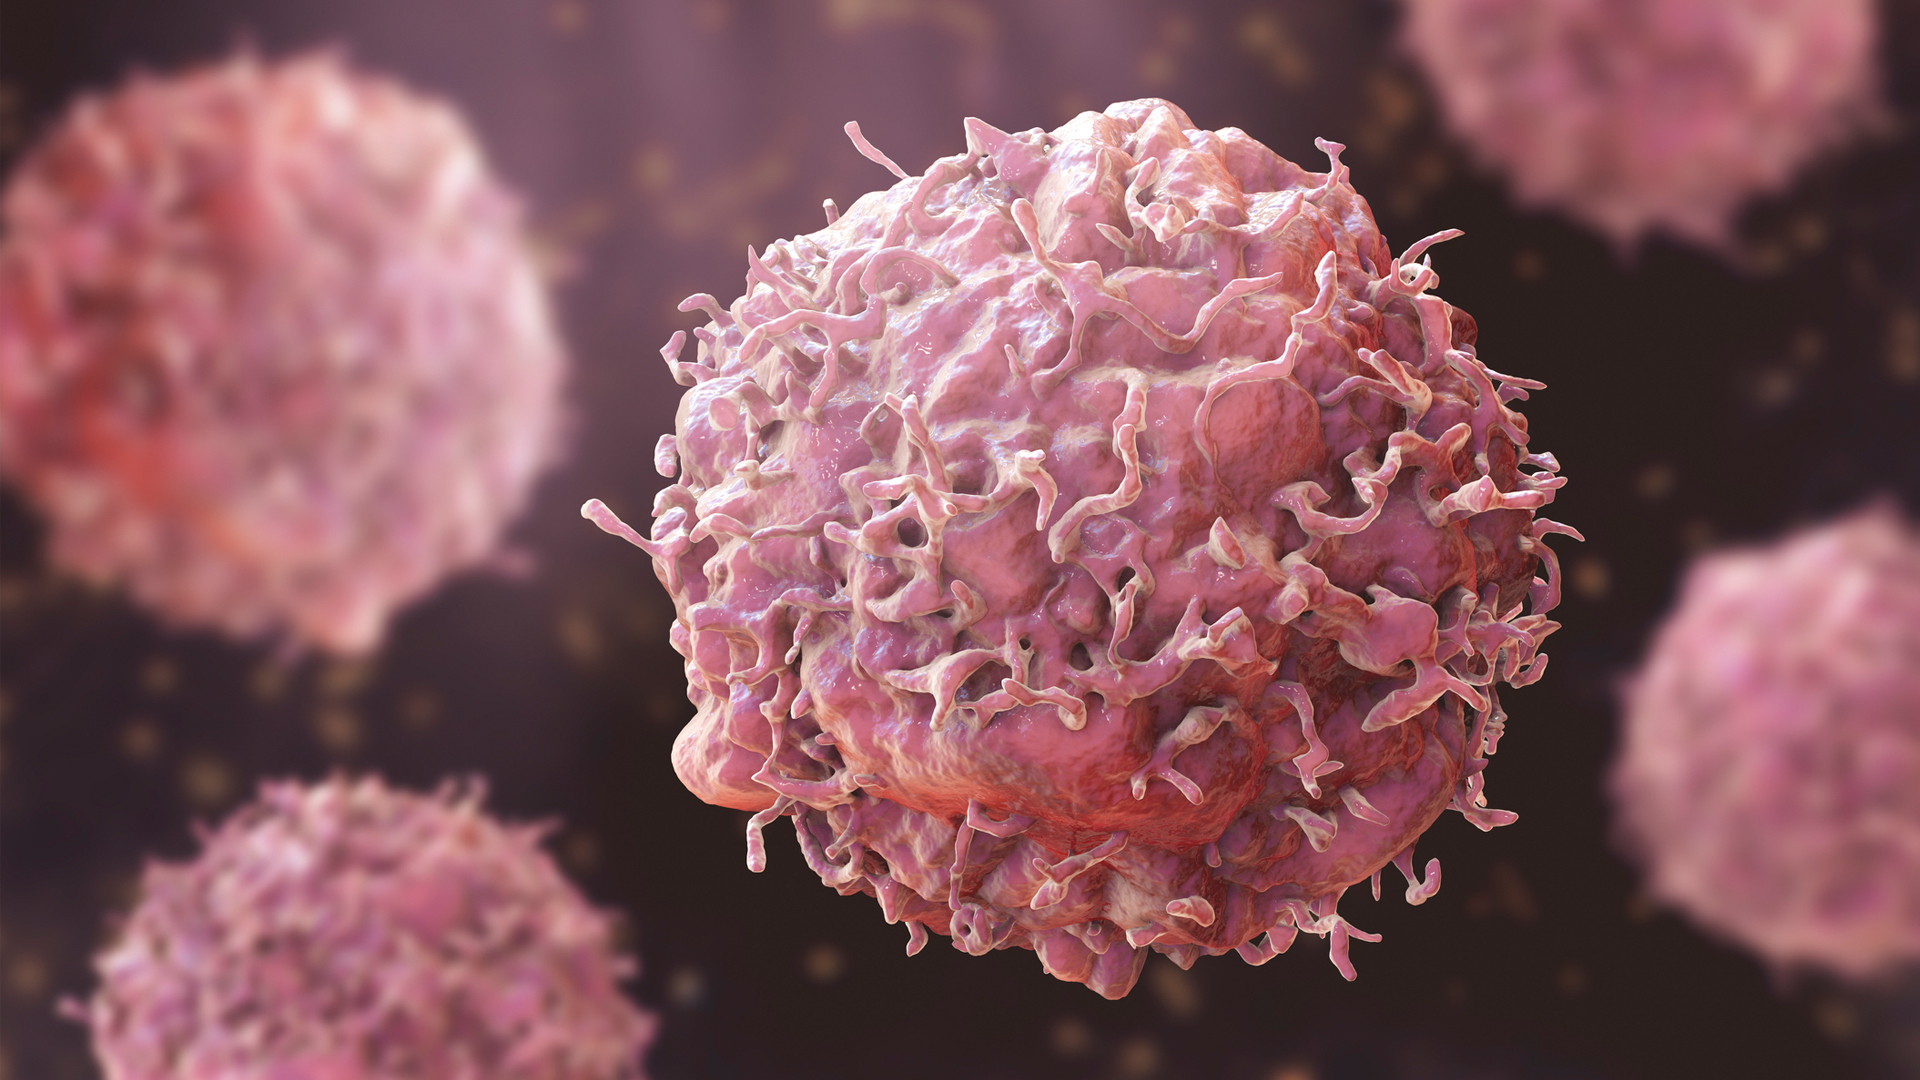 cancer cell illustration